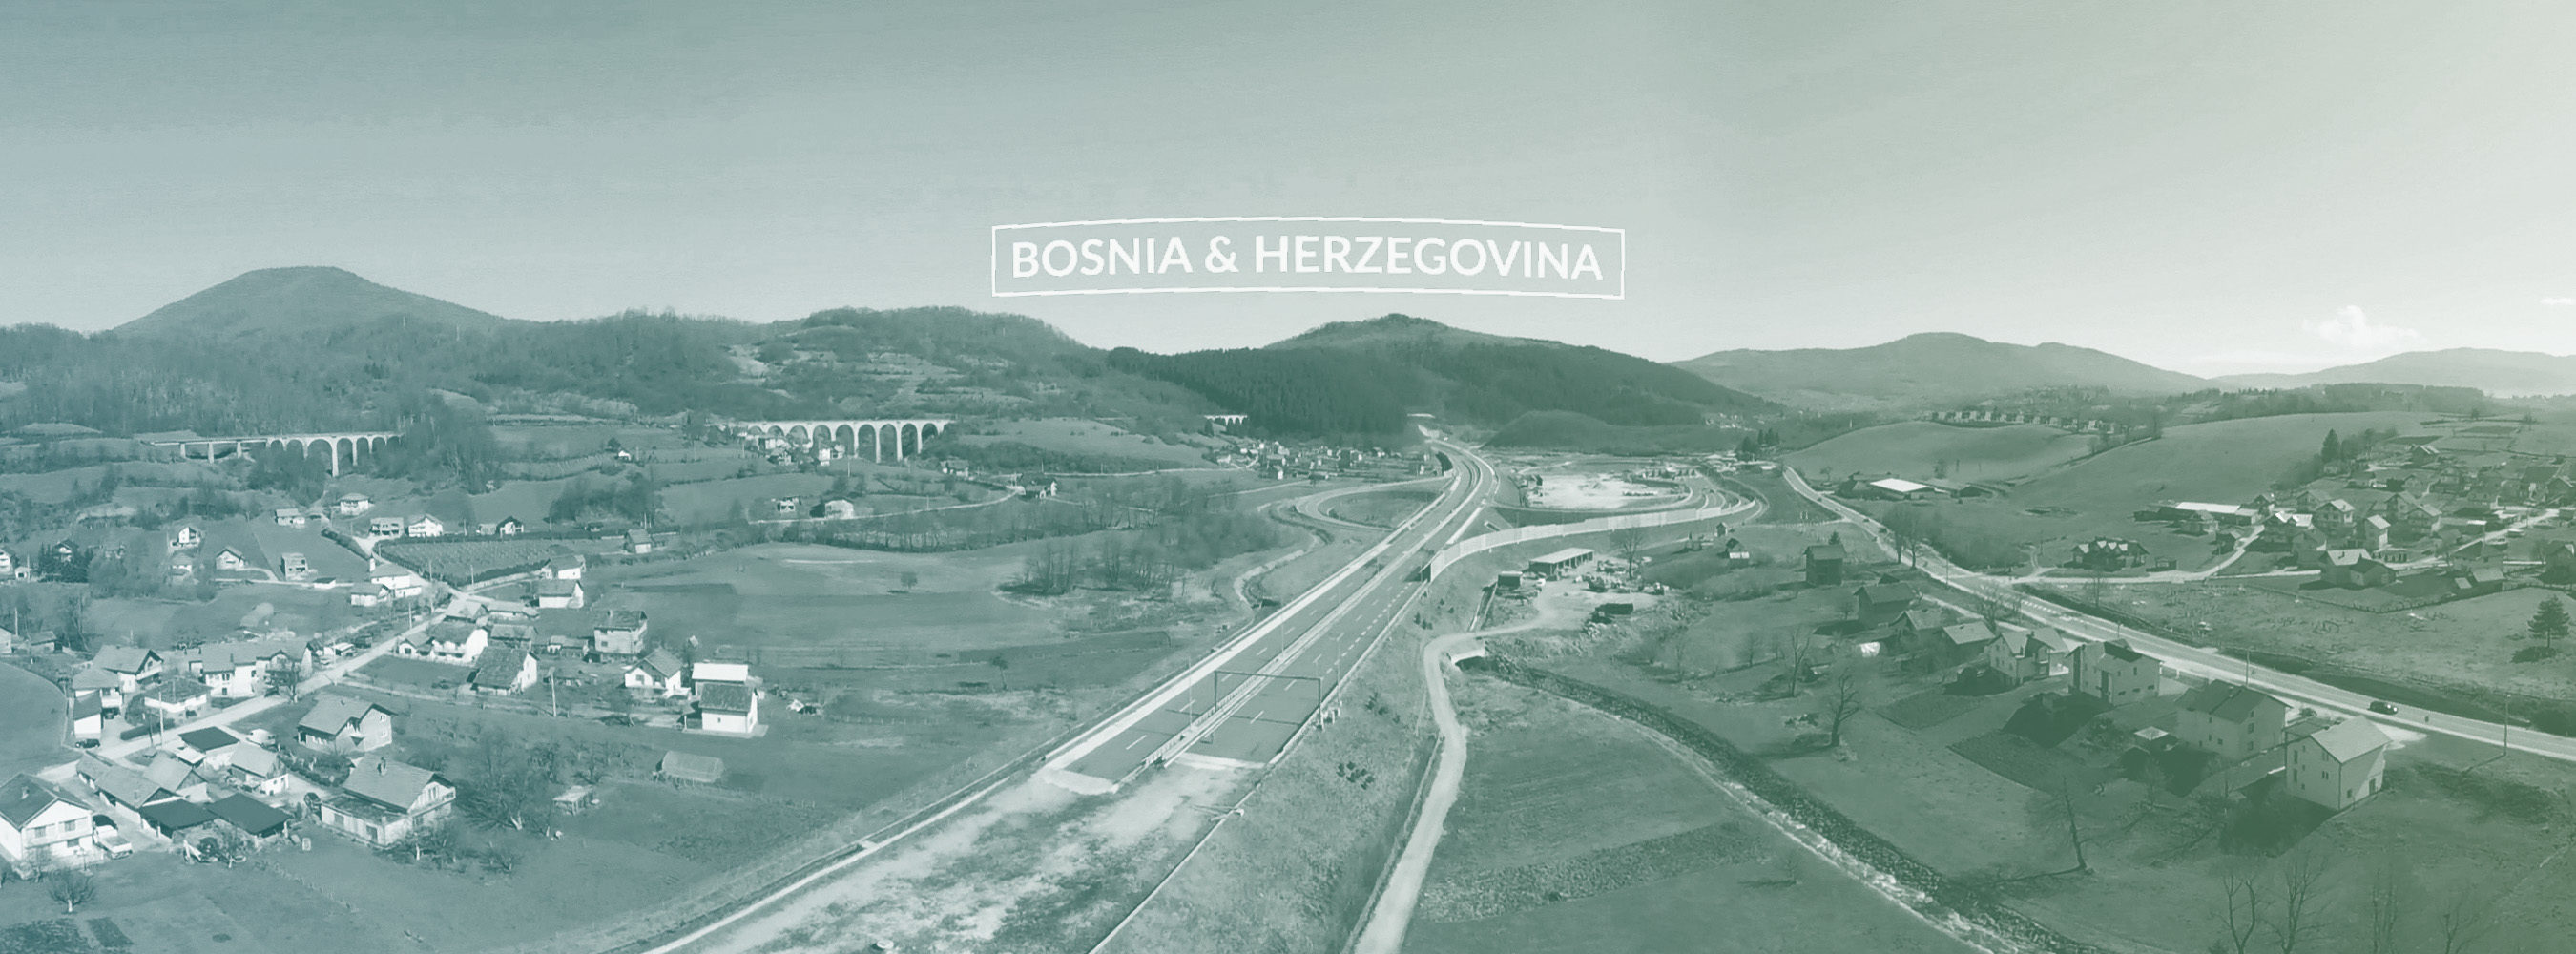 Travel Across Bosnia